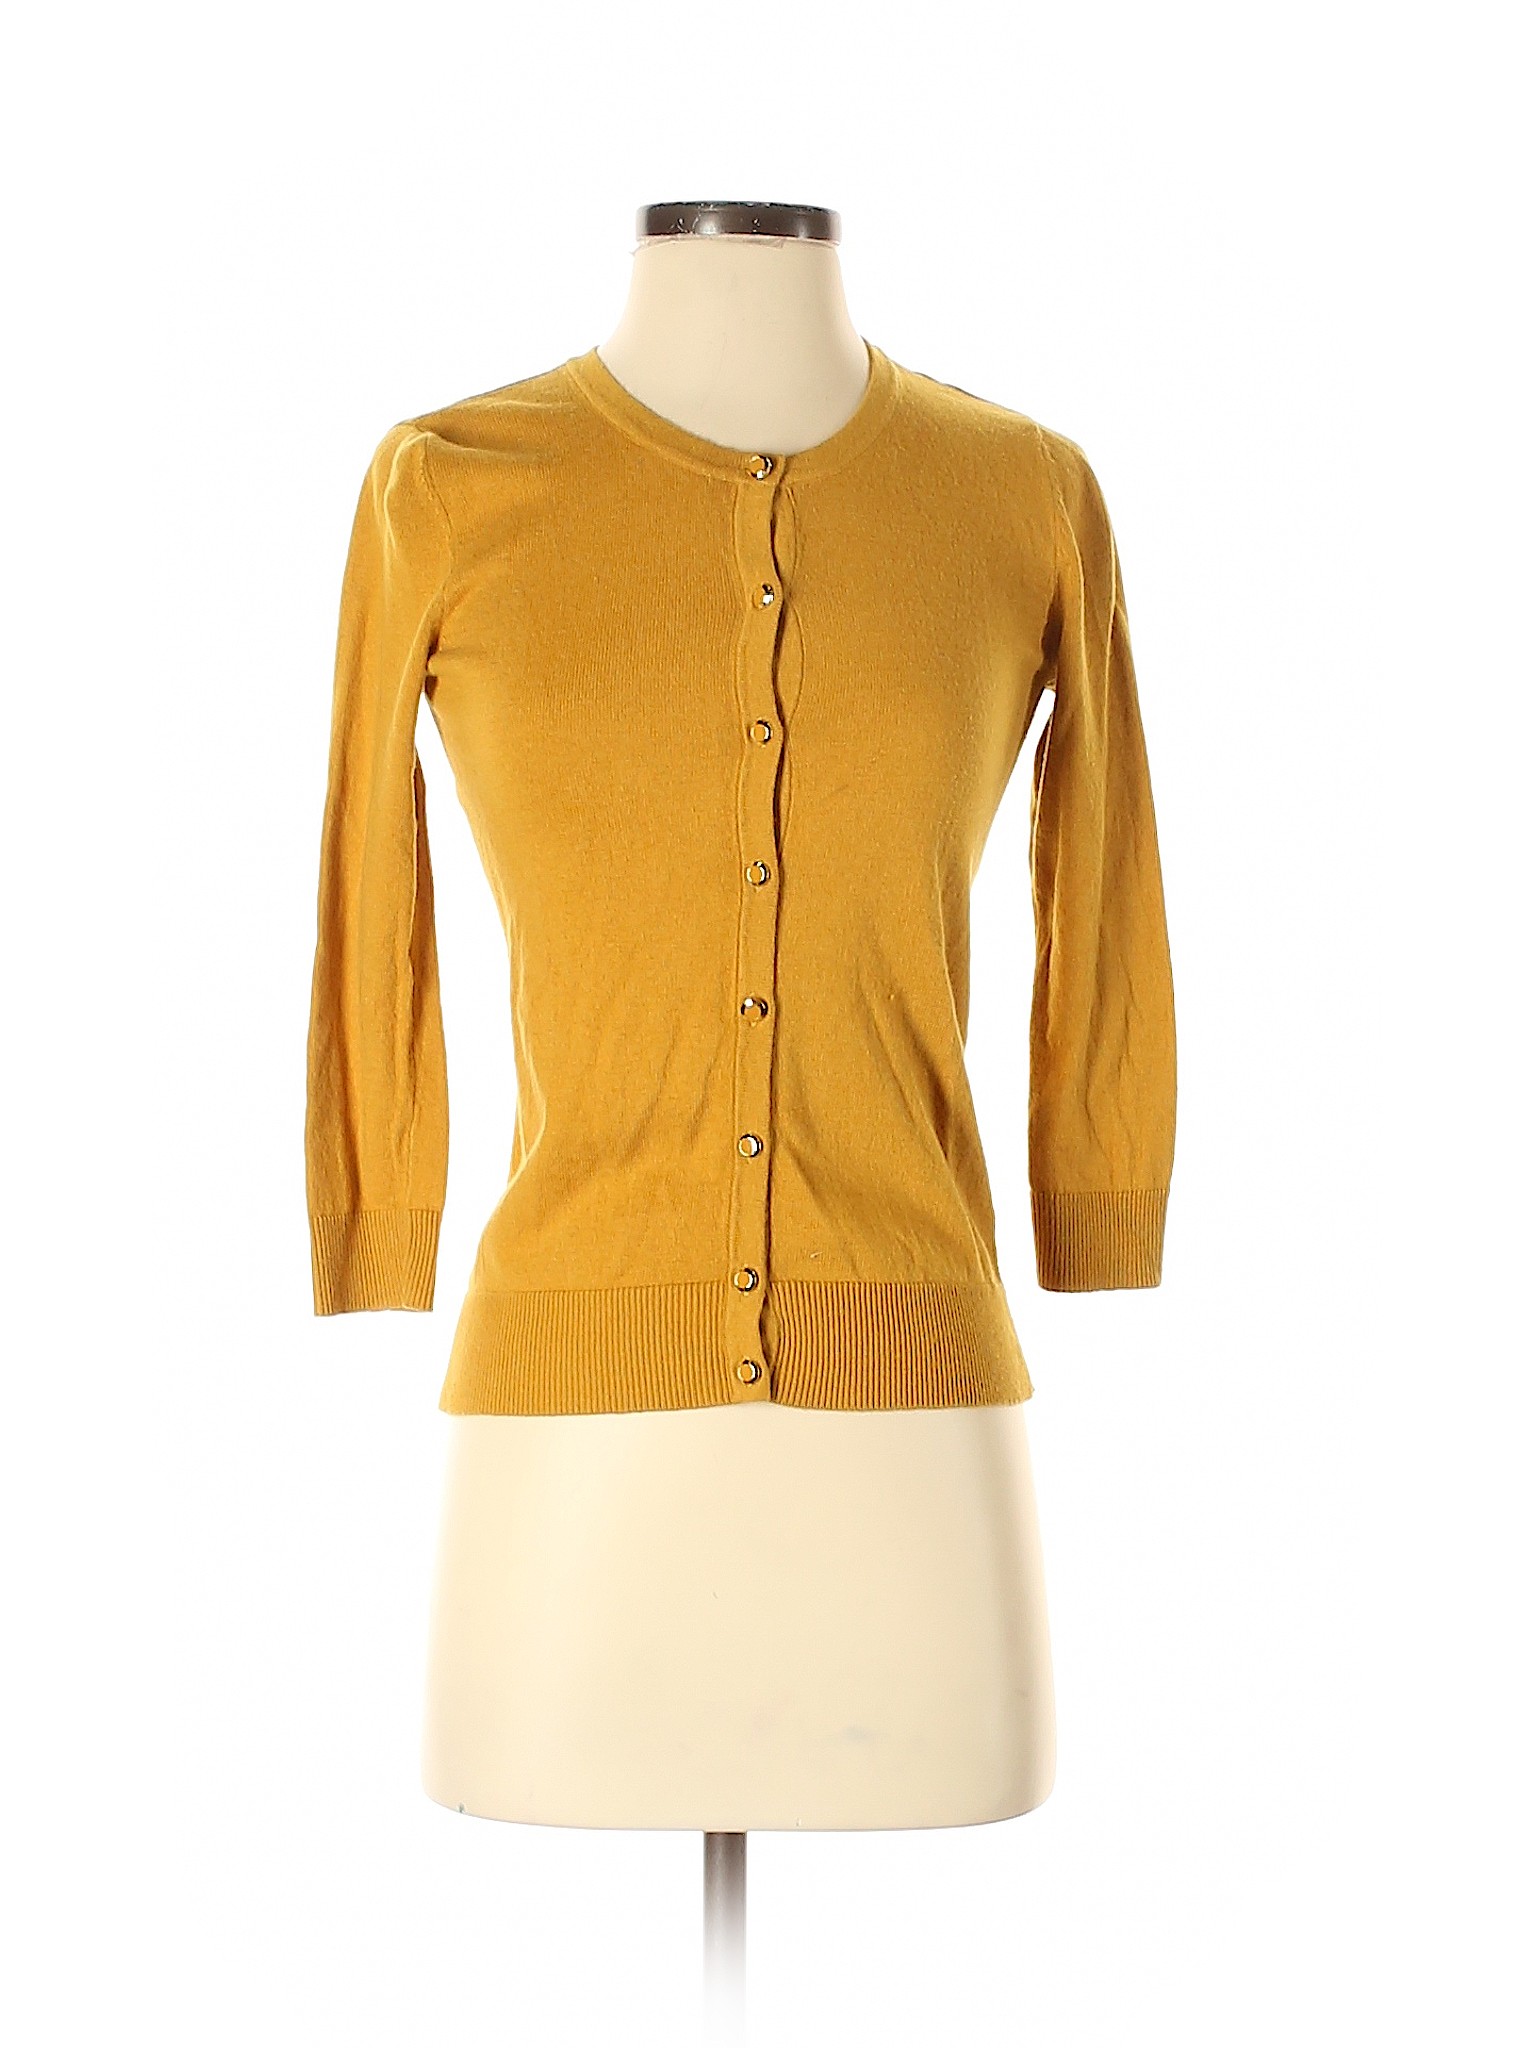 7th Avenue Design Studio New York & Company Women Yellow Cardigan XS | eBay